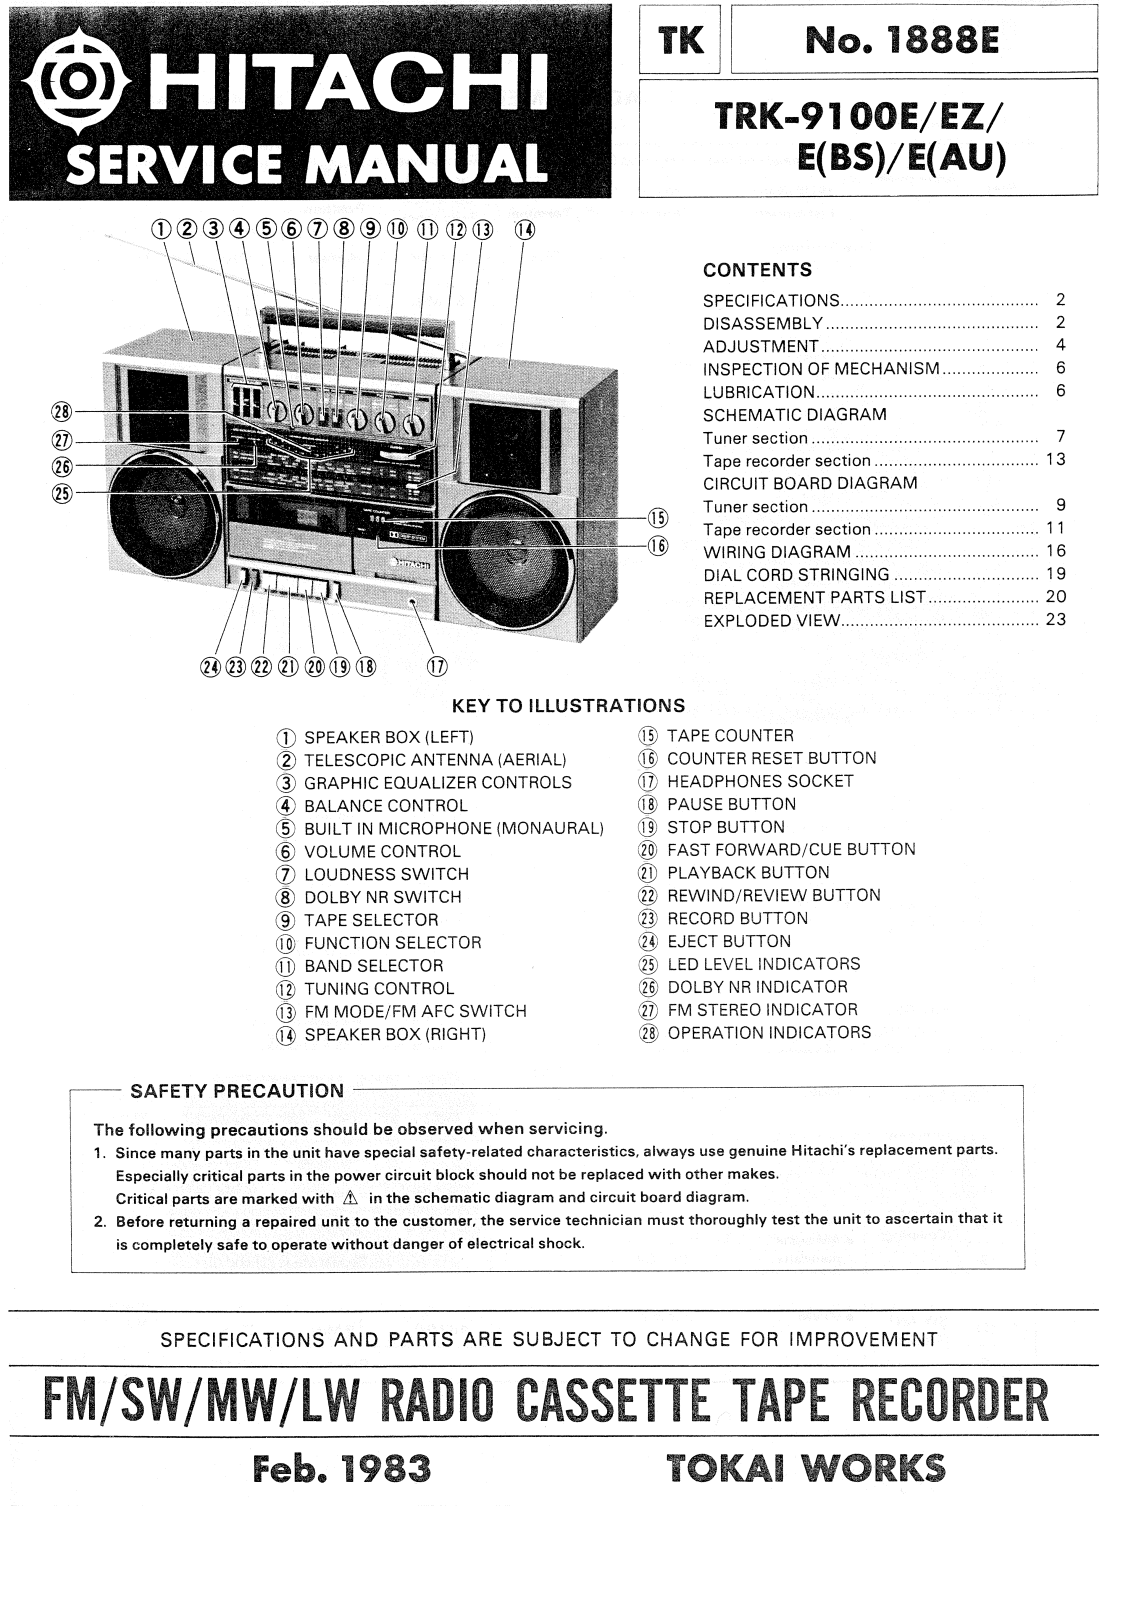 Hitachi TRK-9100 Service Manual